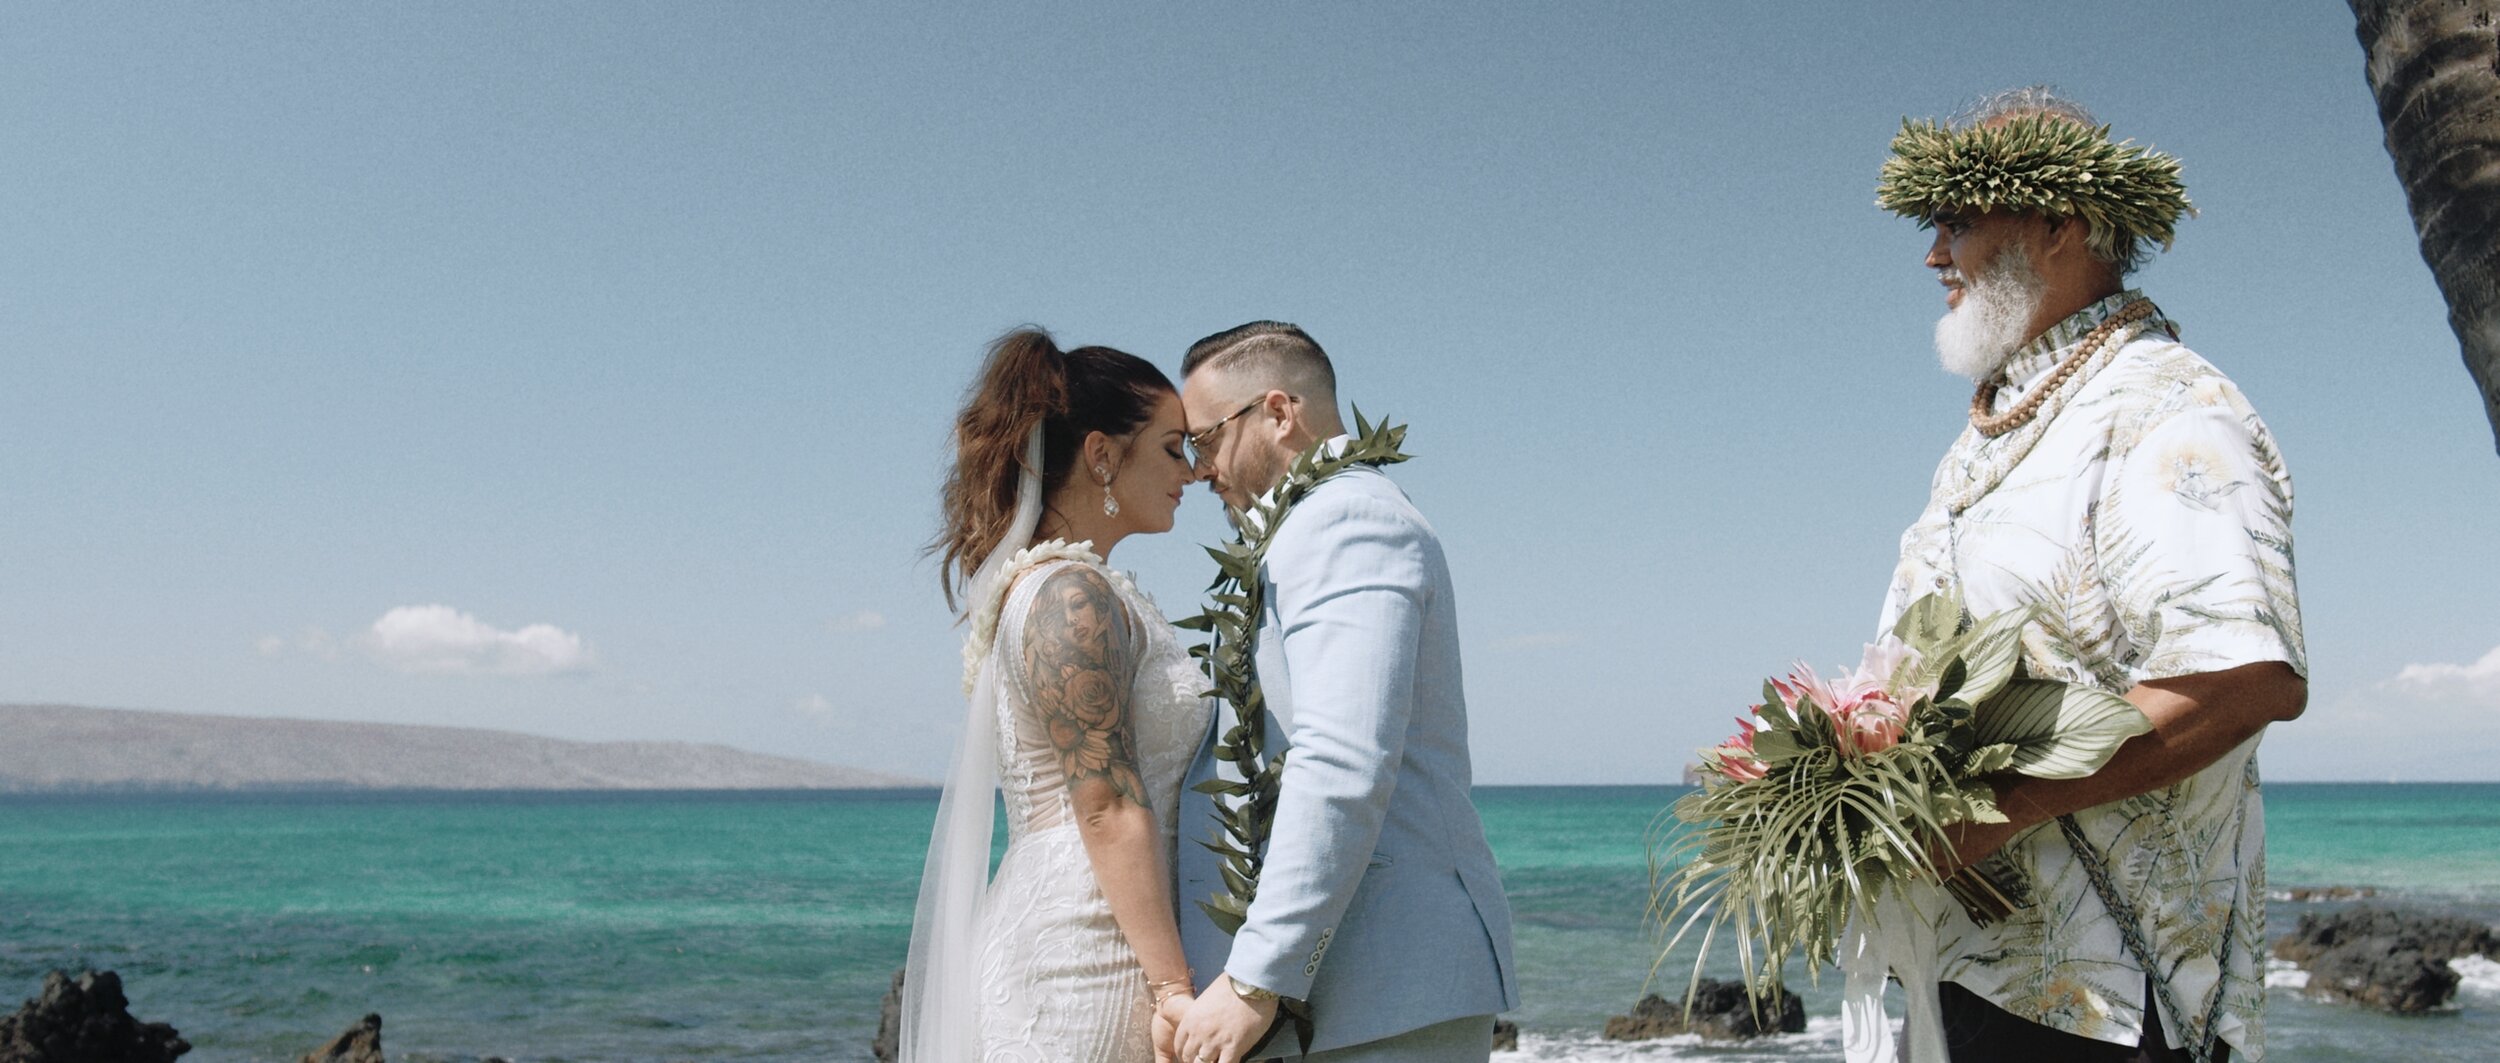 Bride and groom sharing the aloha